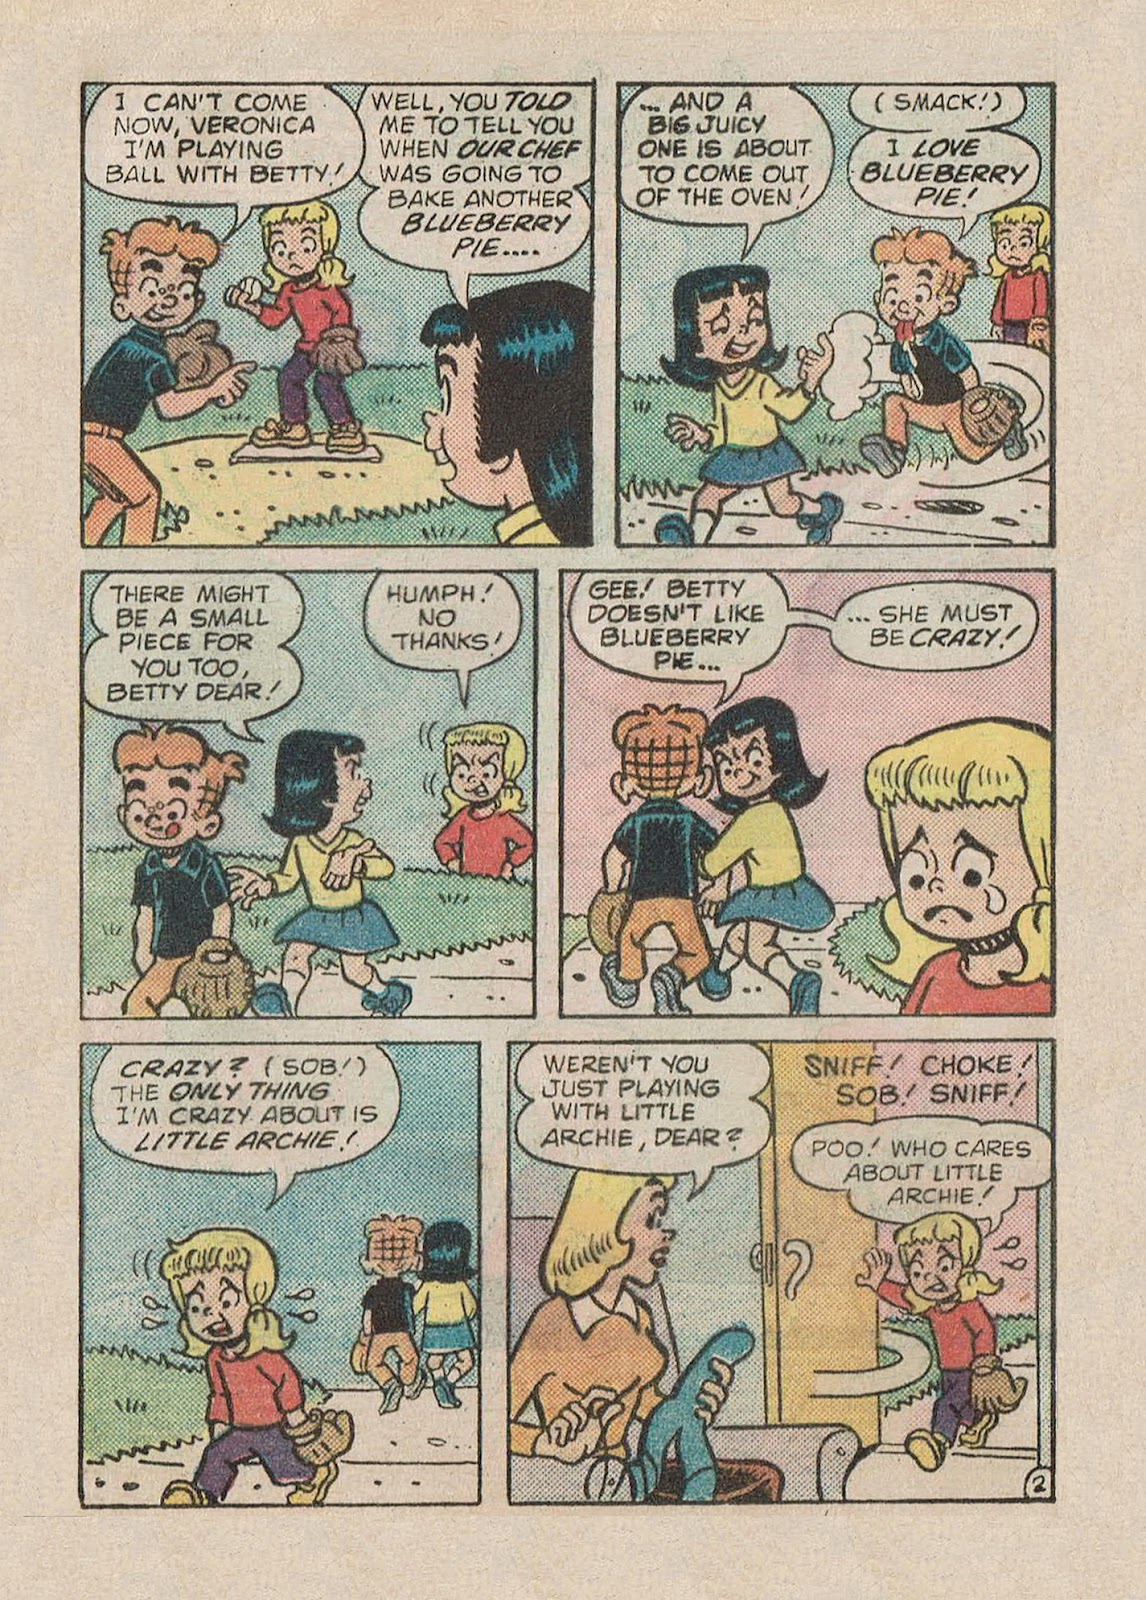 Little Archie Comics Digest Magazine issue 25 - Page 4